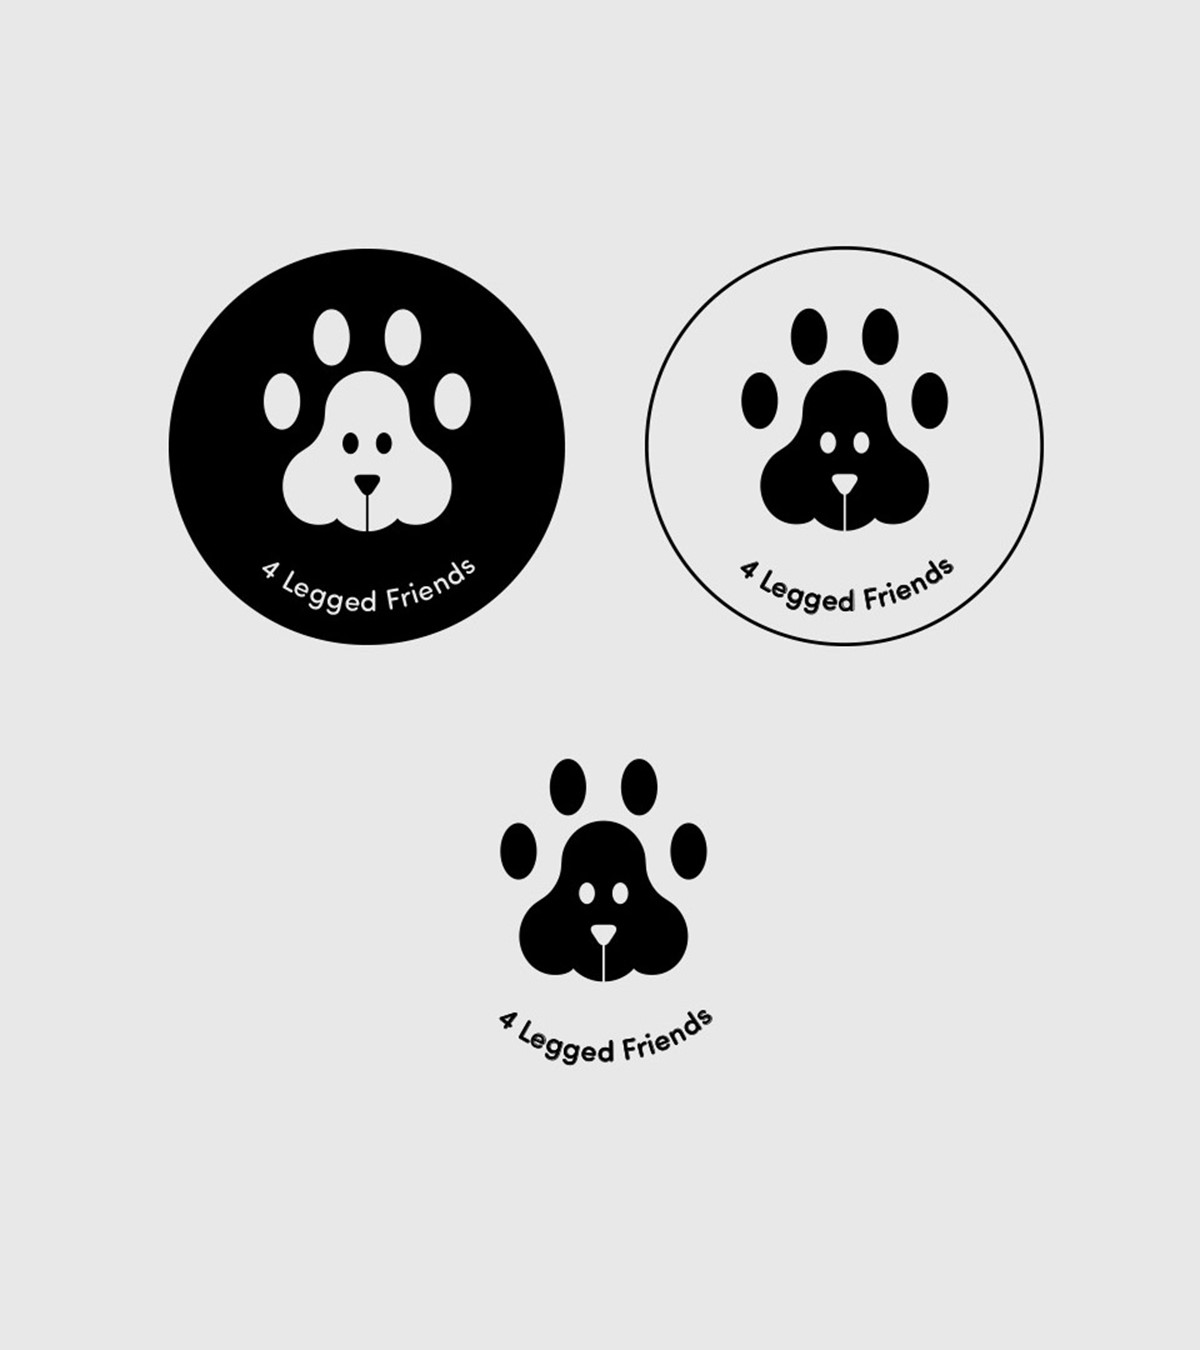 4 Legged Friends identity logo variations in black. Identity design by Superfried.